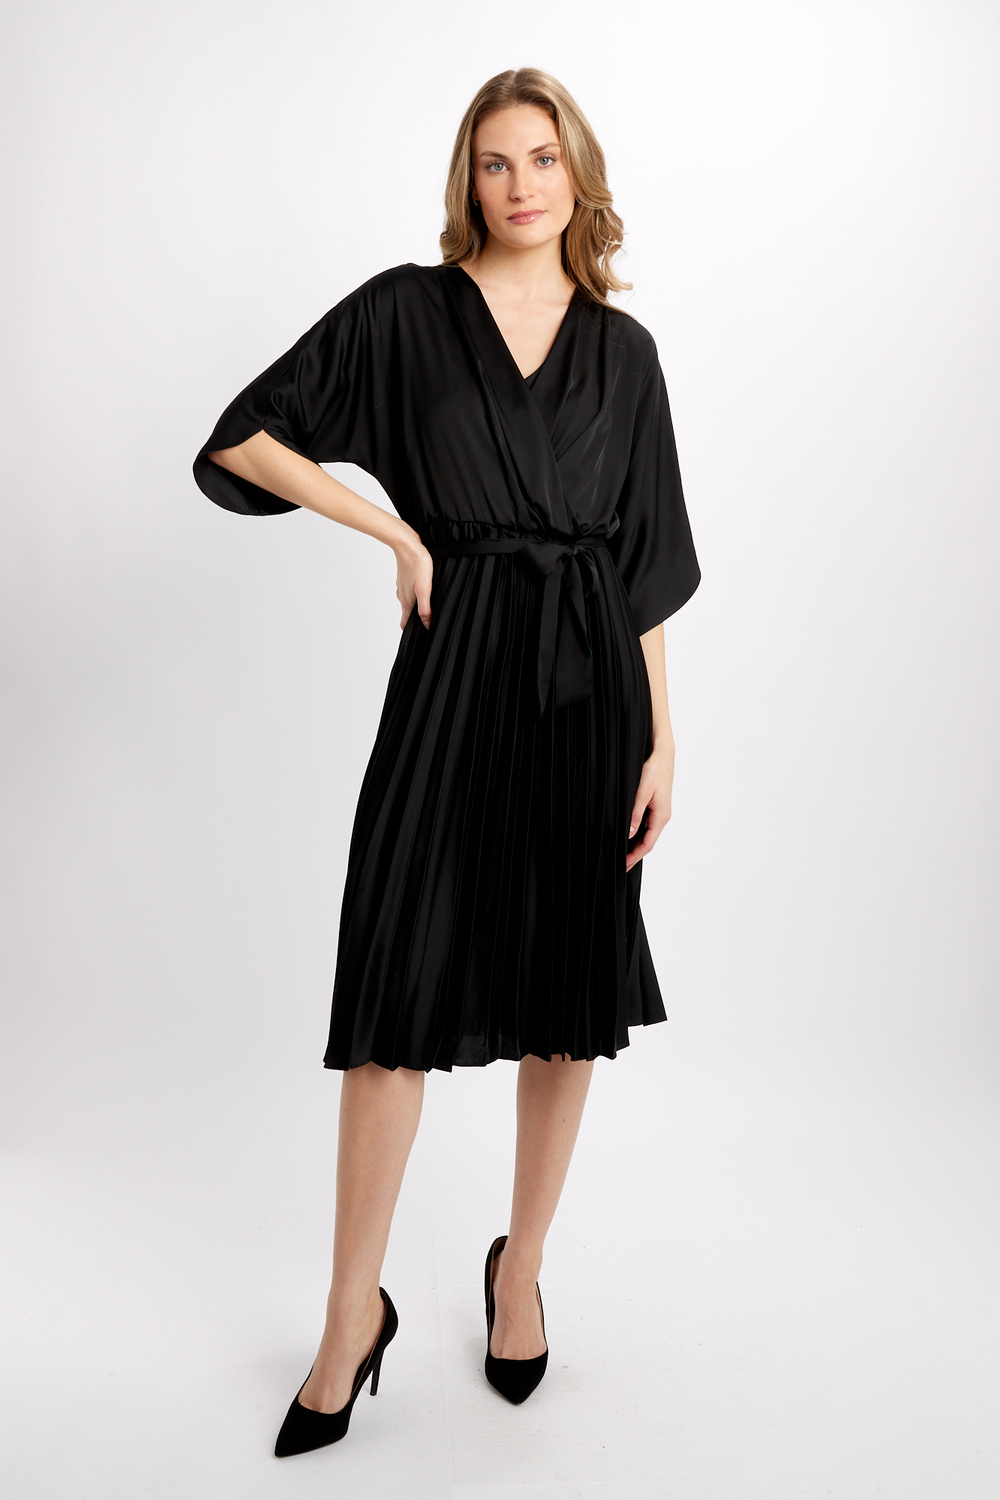 Ruffled wrap dress Style 234265. Black